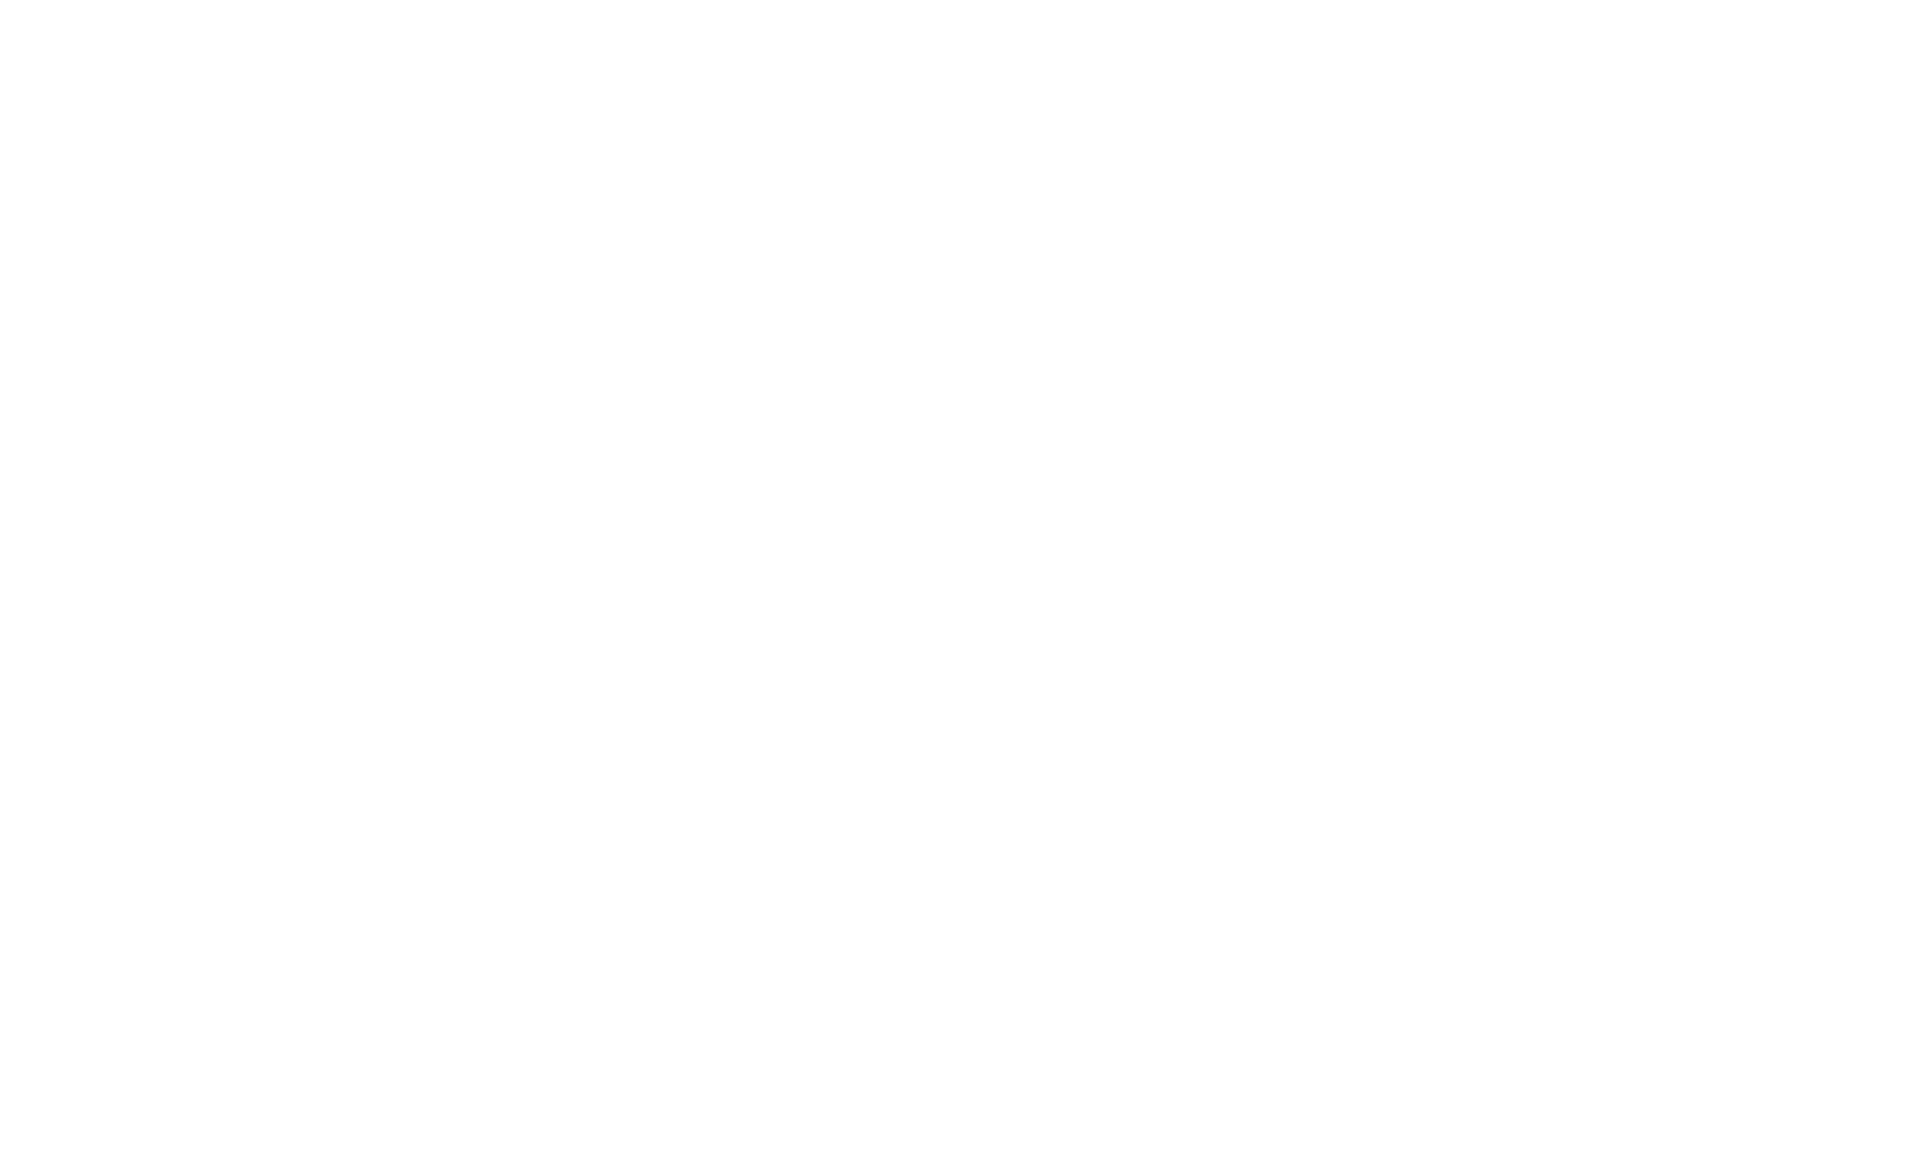 Death in Paradise logo